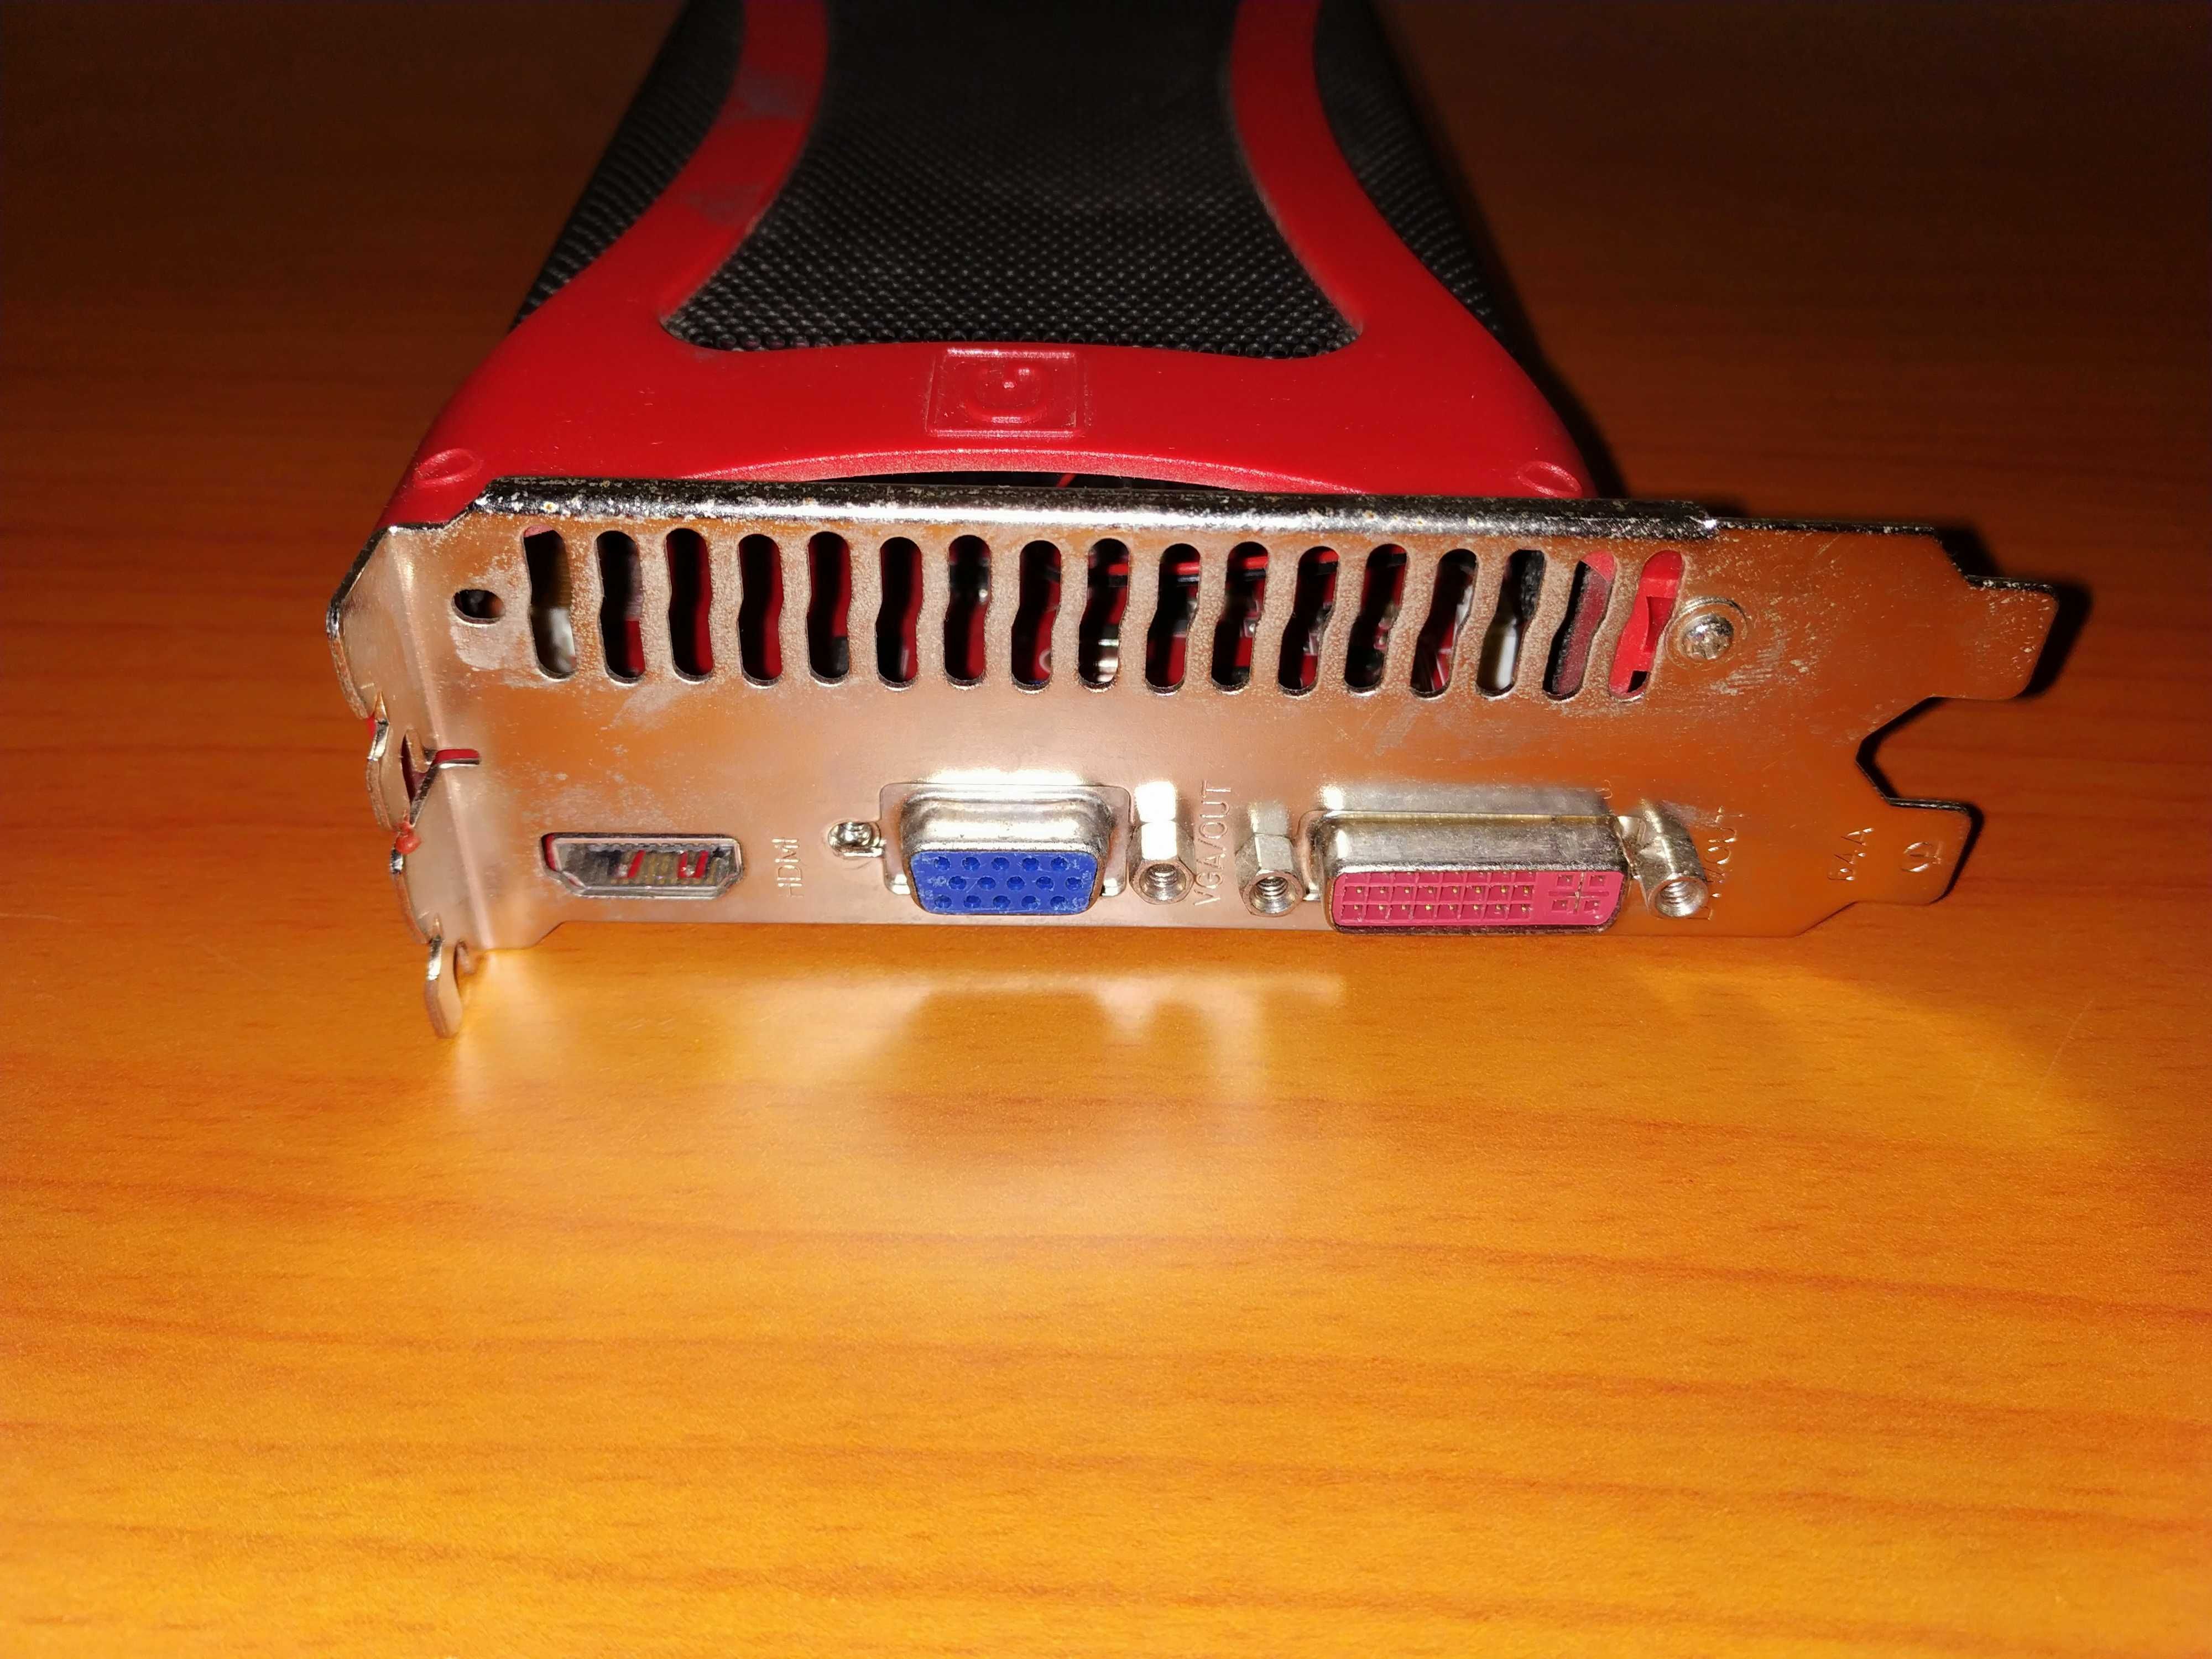 Видеокарта Gainward 8600 GT PCI E 256mb DDR3 HDMI DVI б/у